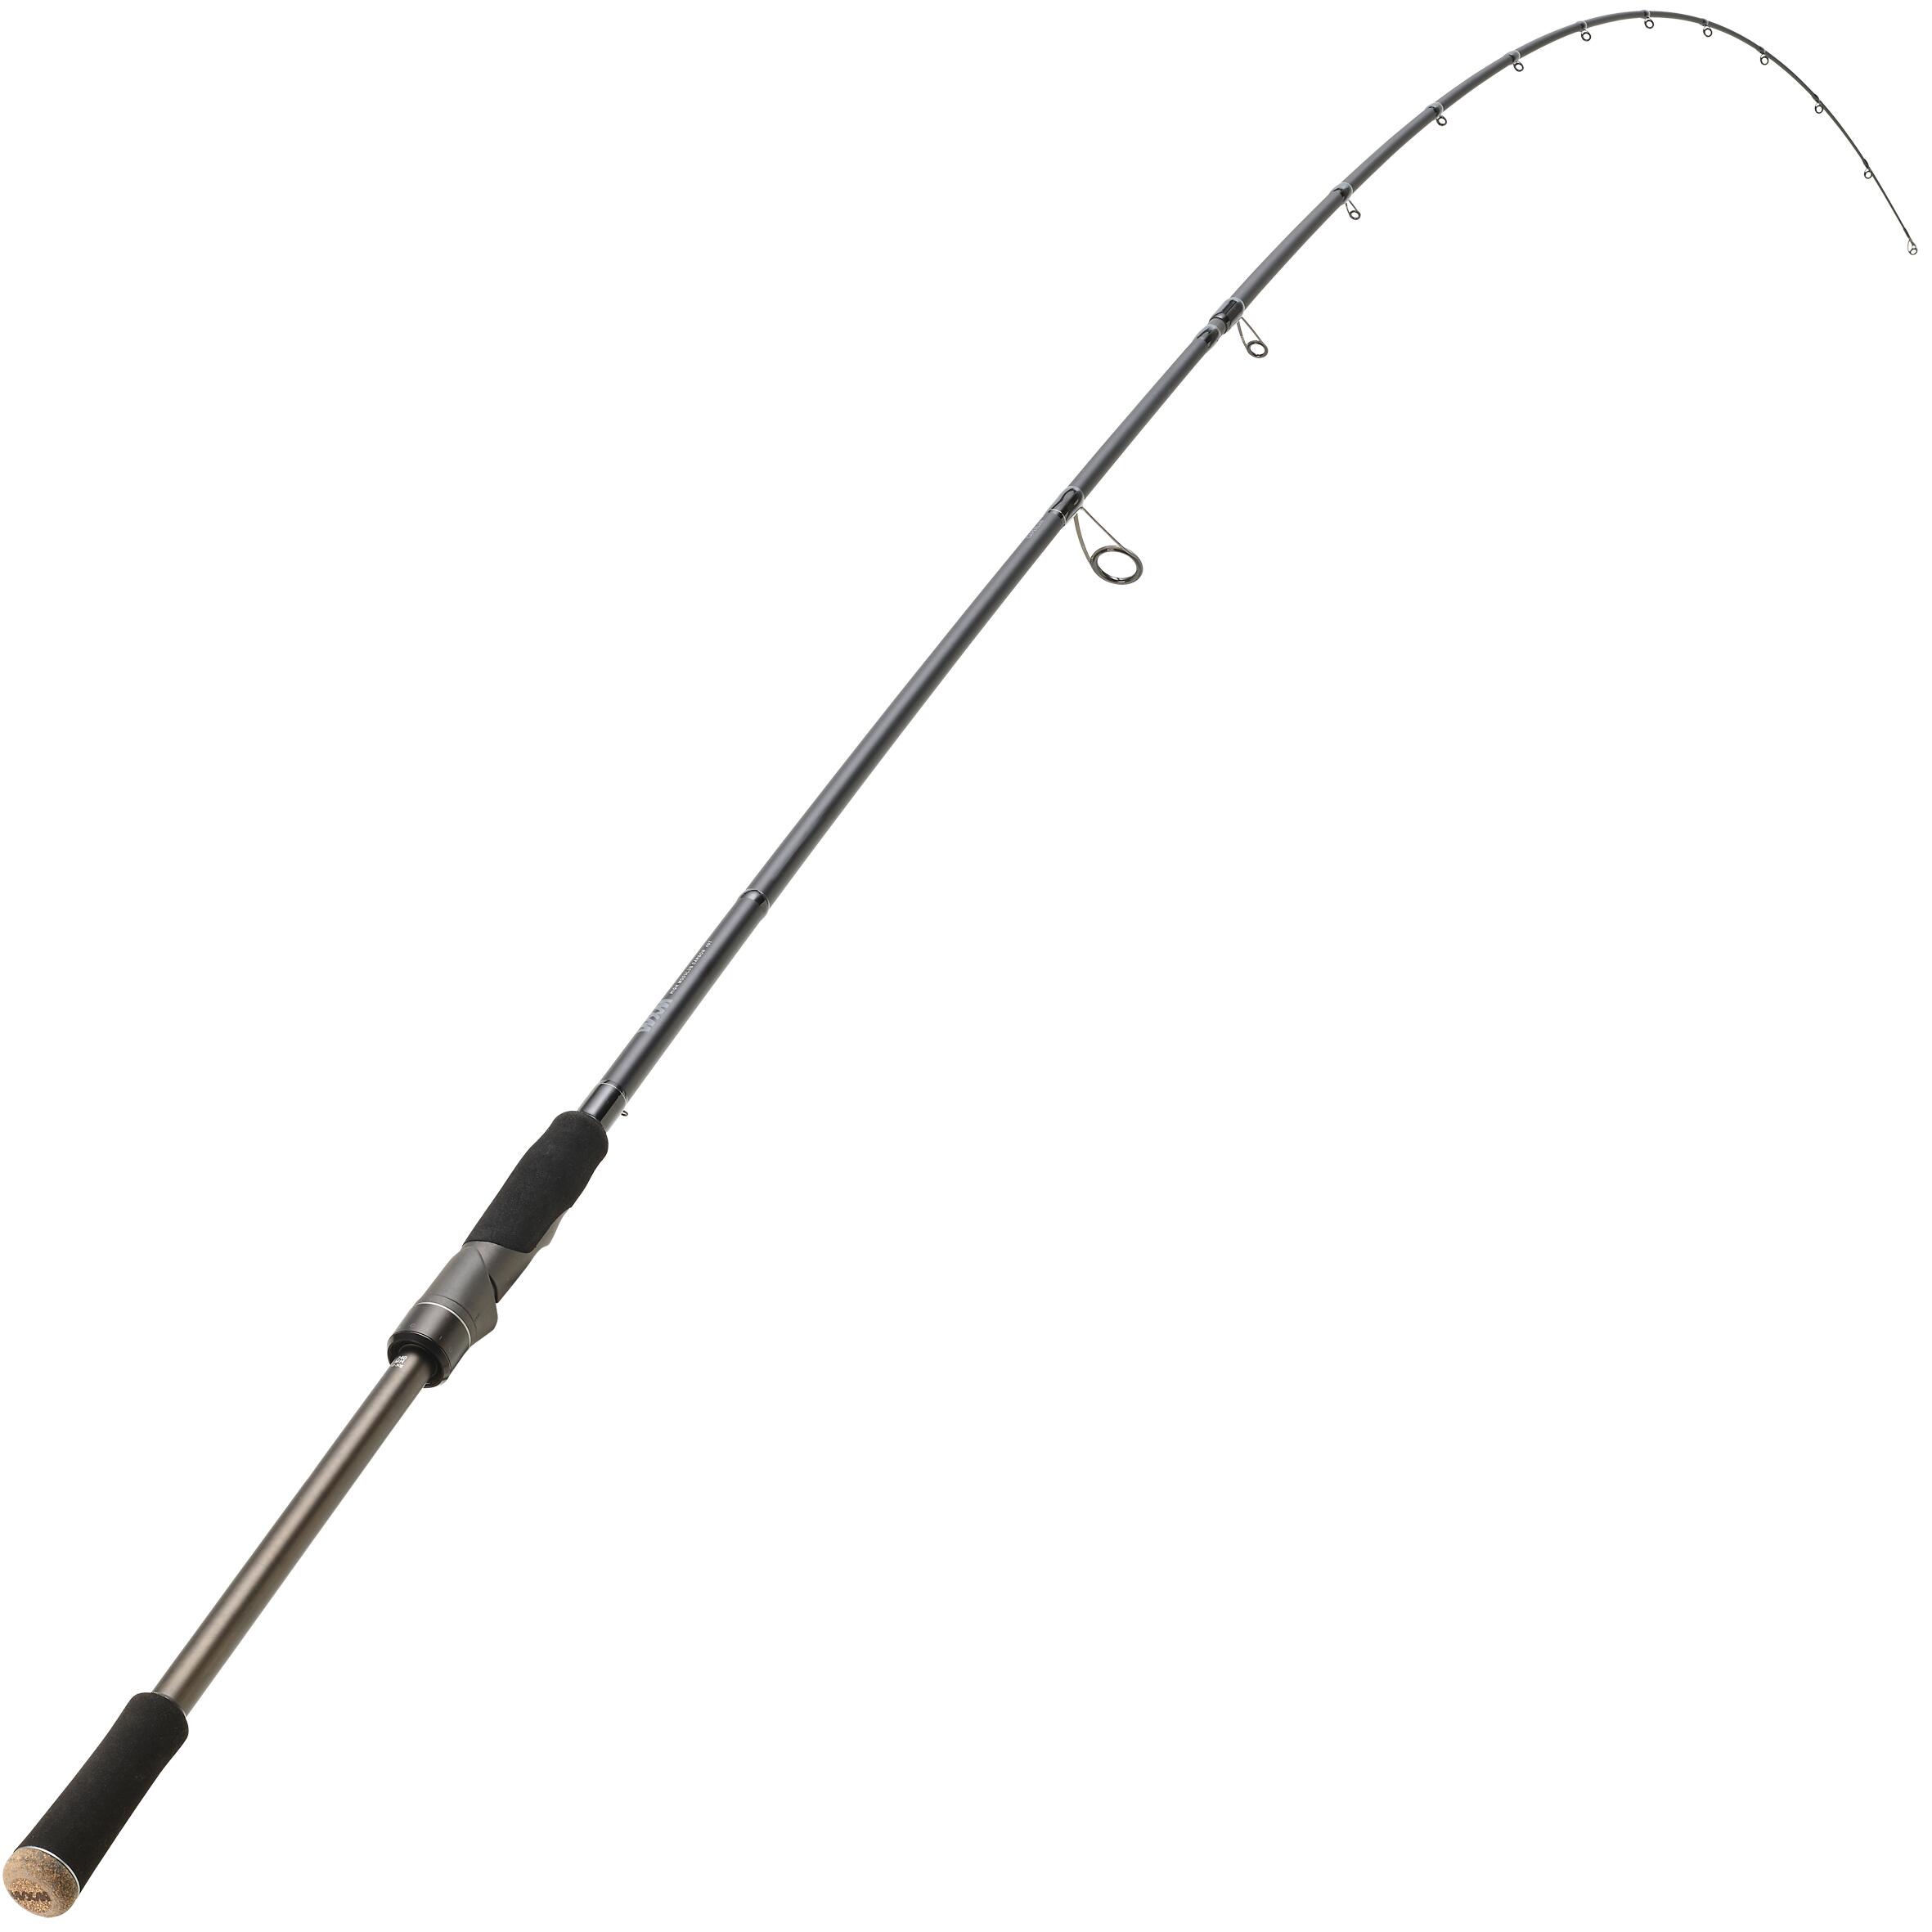 WMX-9 240 MH lure fishing rod